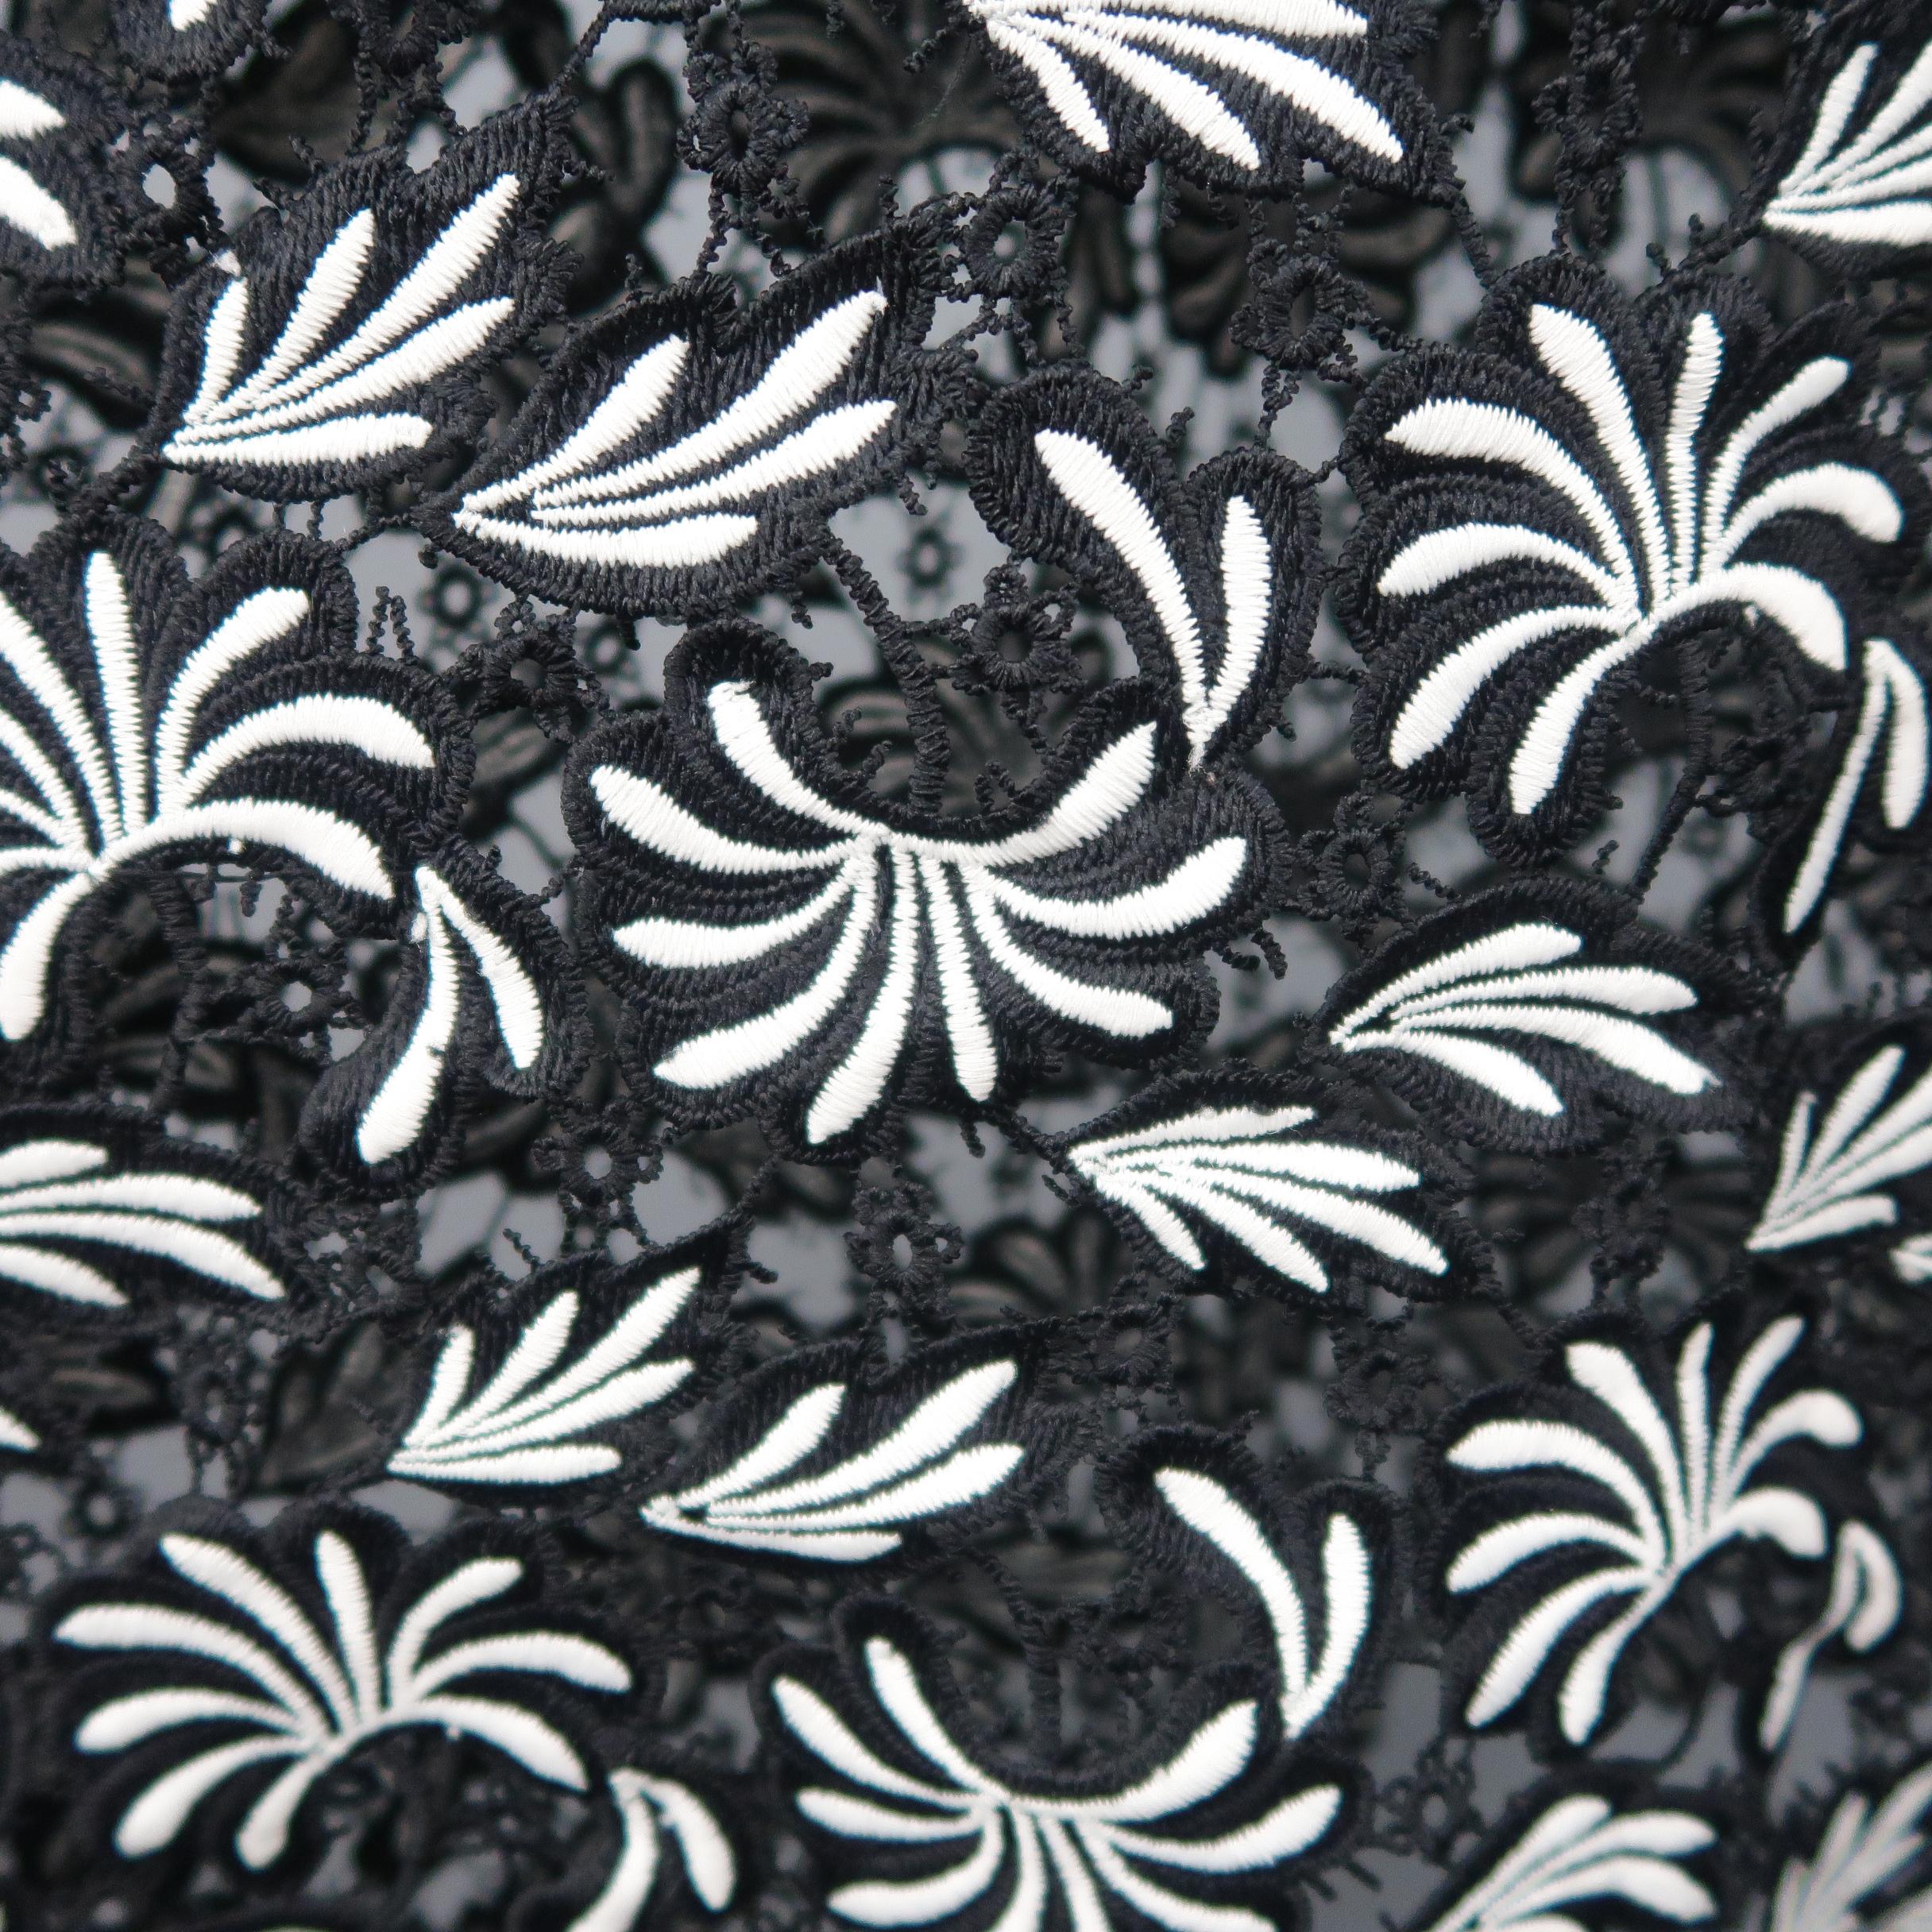 SELF-PORTRAIT Size 0 Black & White Floral Lace Flair Sheath Dress 2